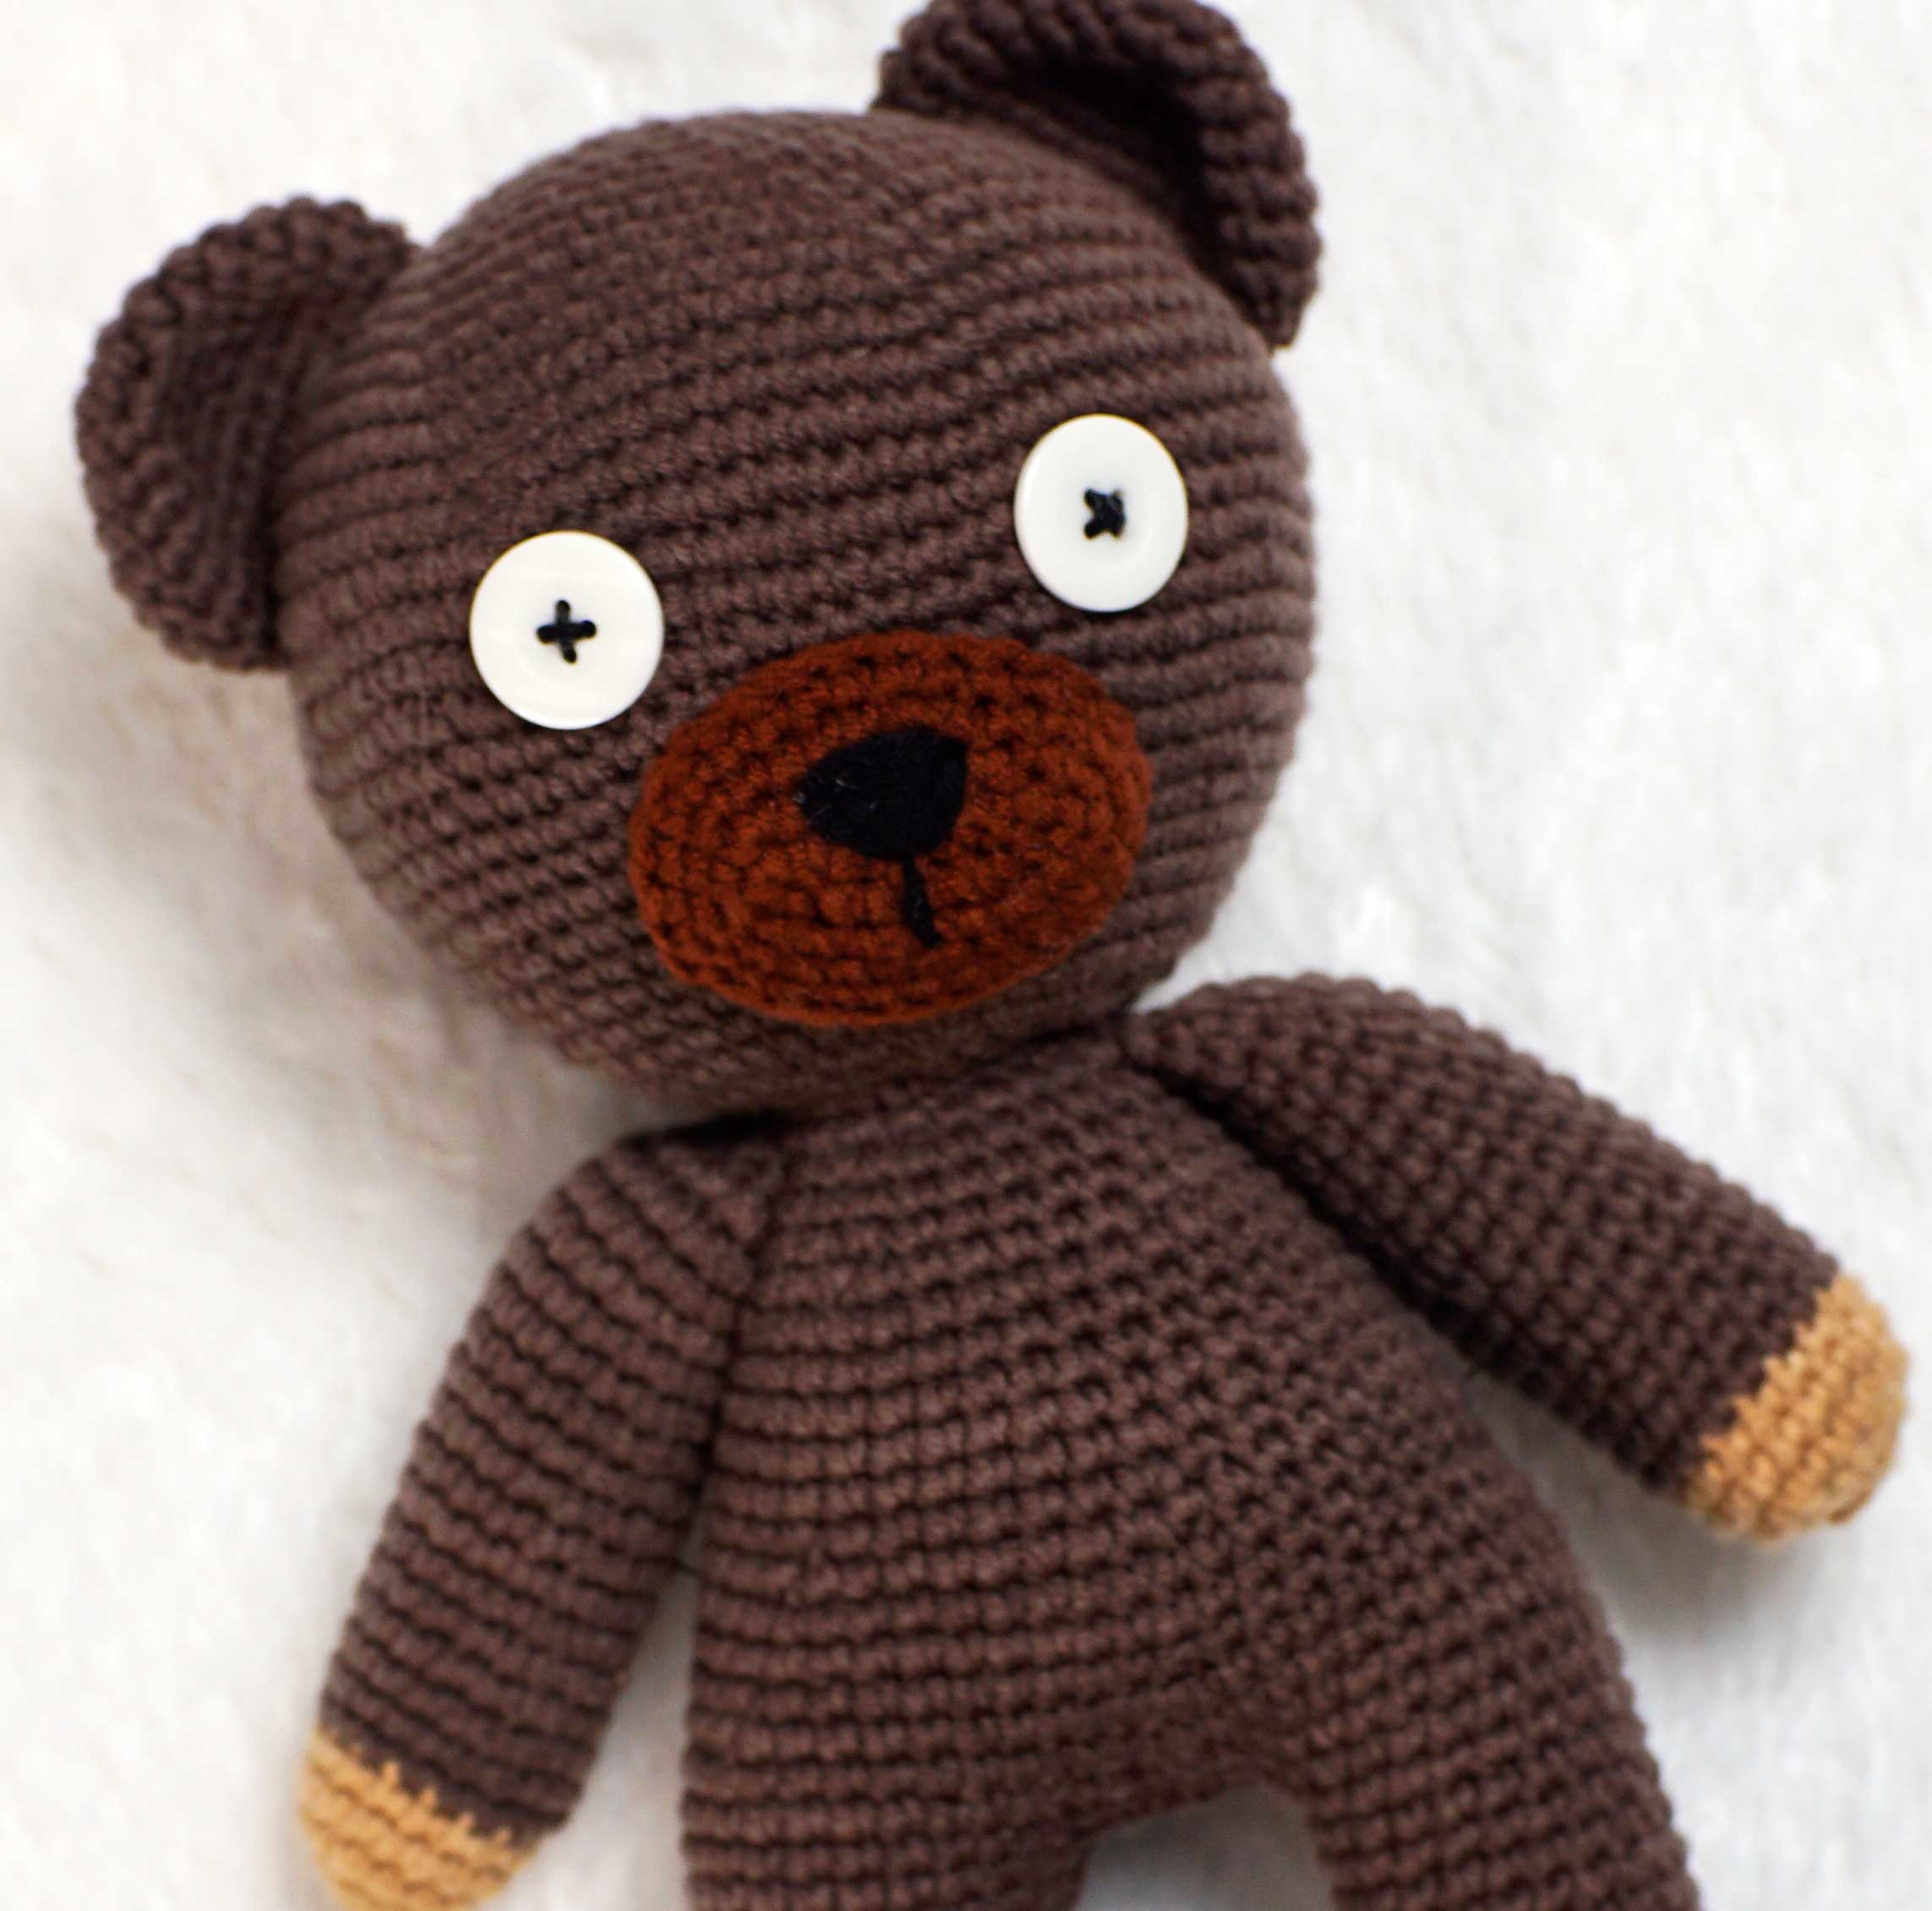 Tester for Mr Bean Teddy bear amigurumi - Ribblr community